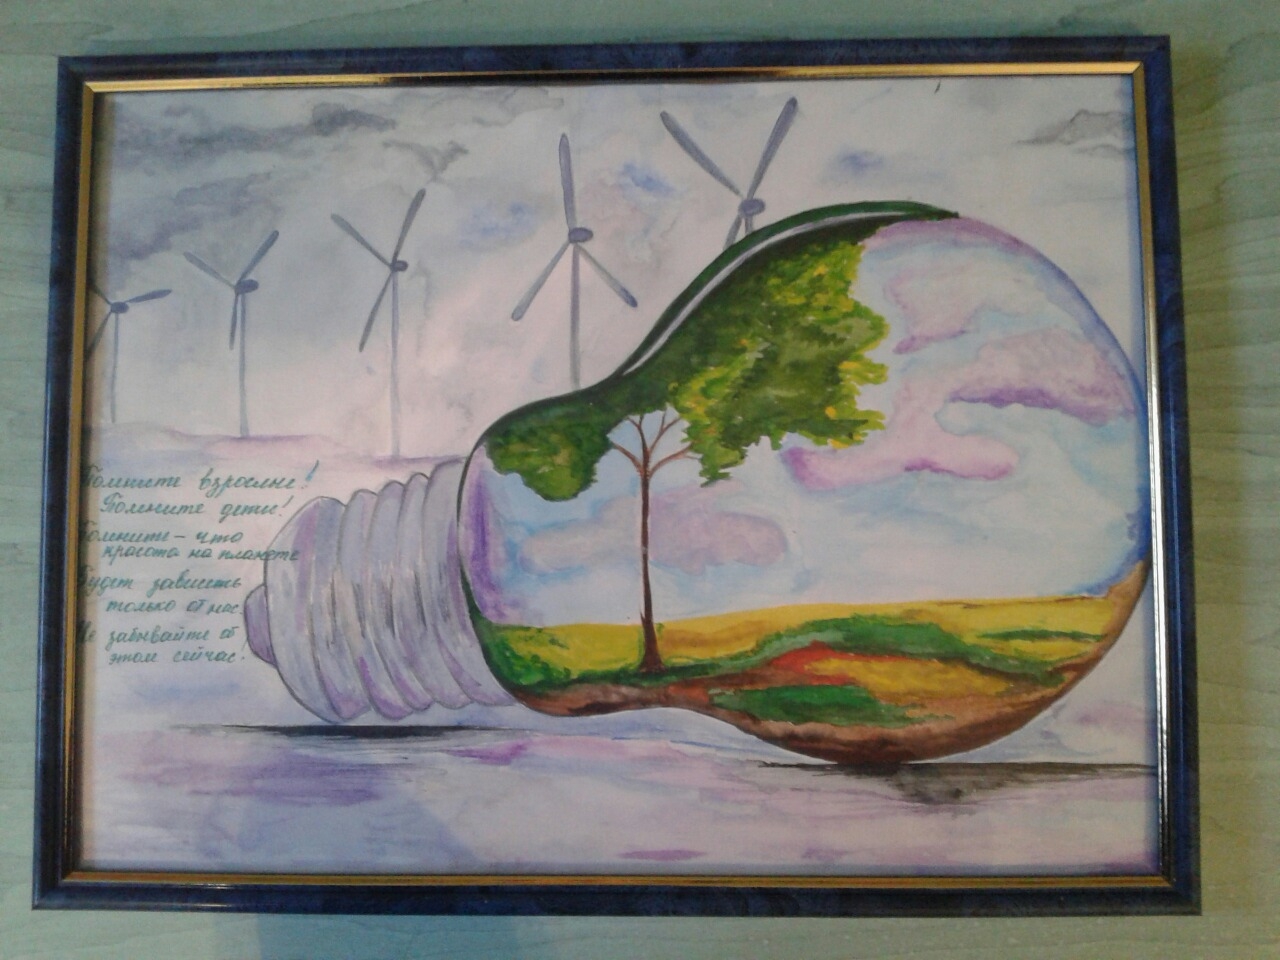 Плакат экология рисунок. Экологический рисунок. Hbceyrb TF 'rjkjubxtcre. Ntve. Рисунок на экологическую тему. Экологический плакат.